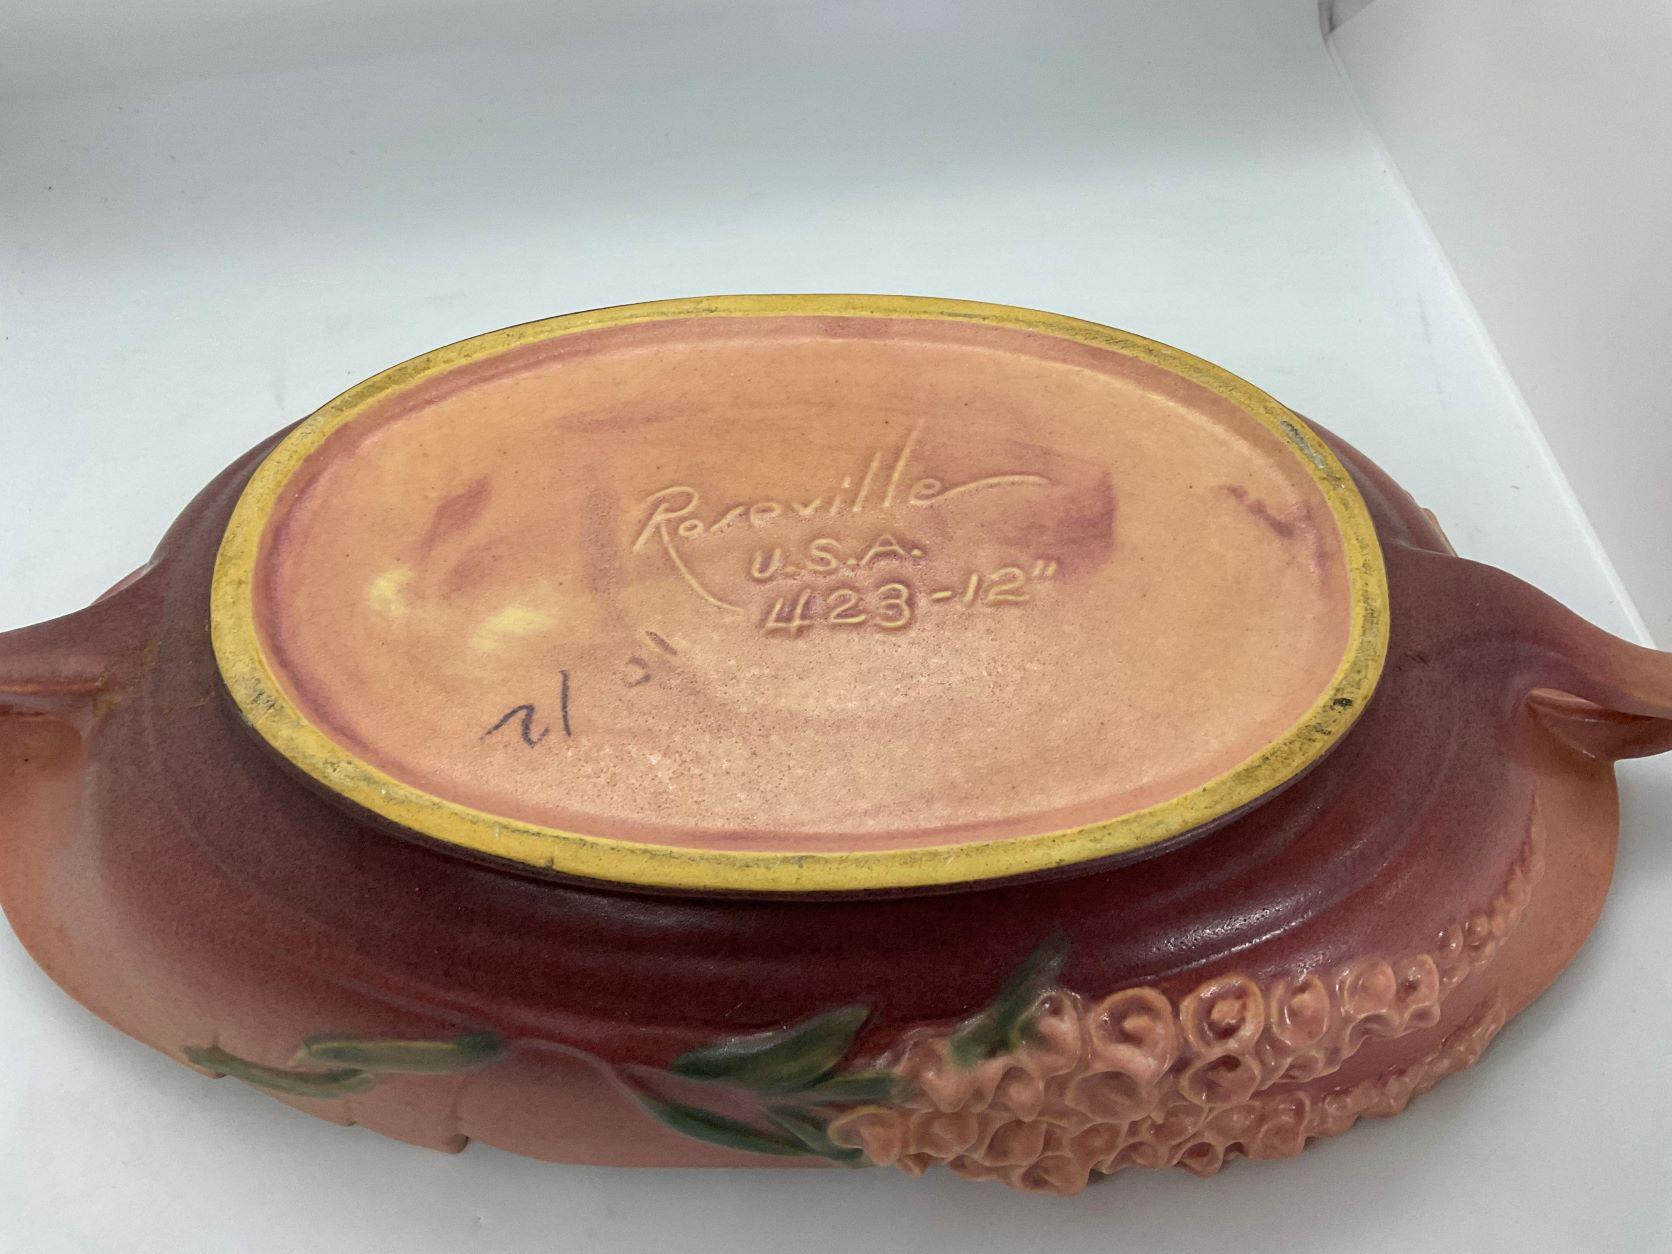 Roseville 423-12 Foxglove Console Bowl